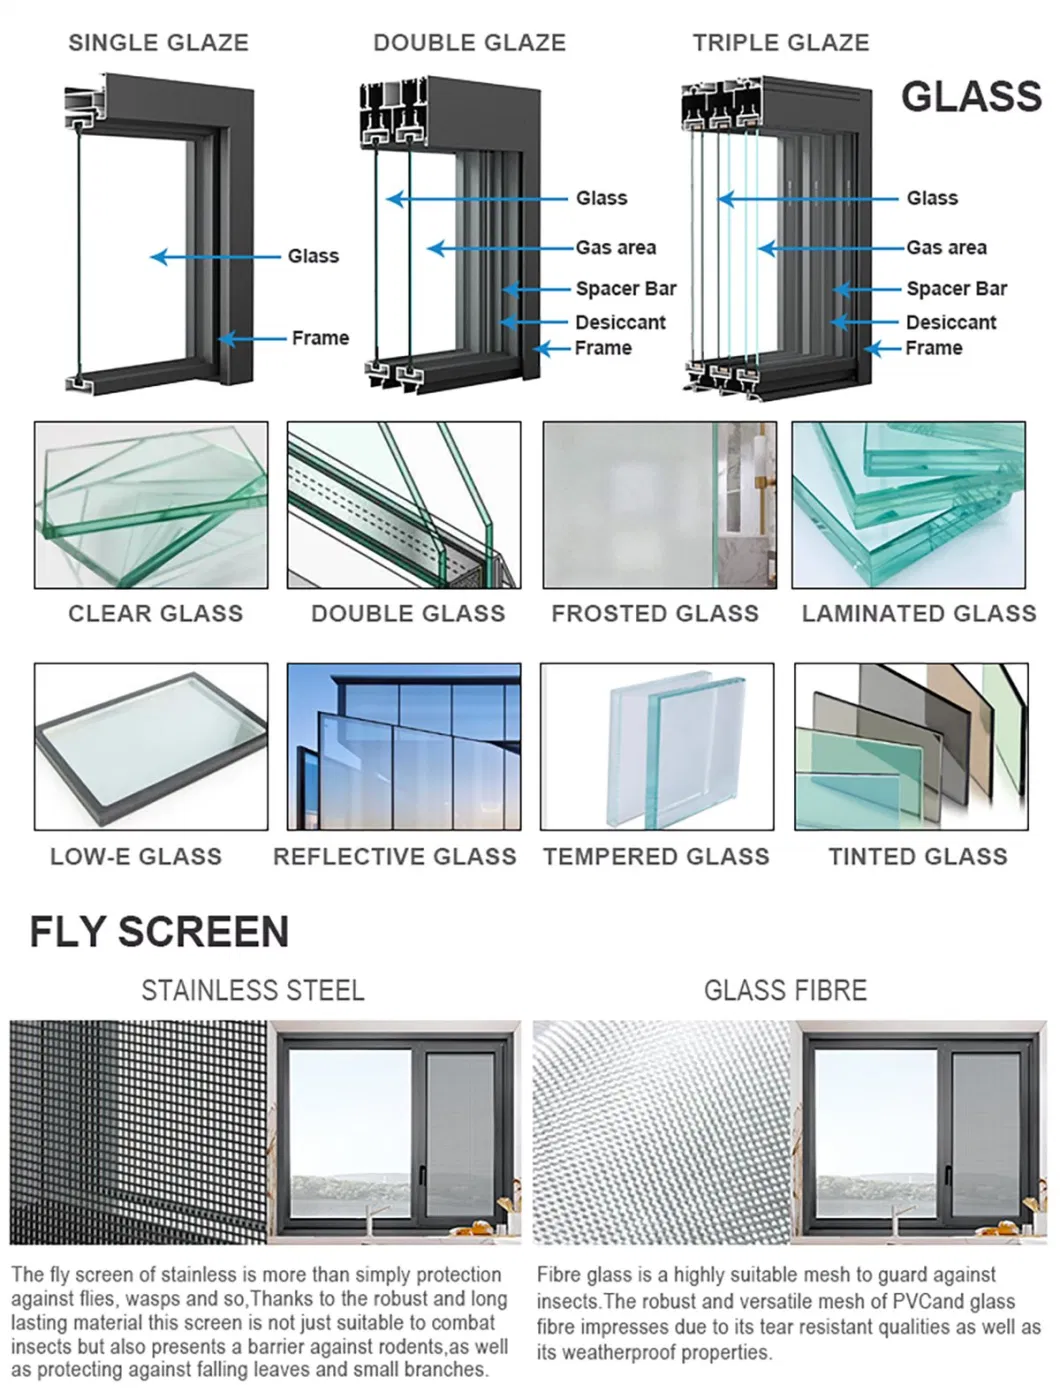 Heavy Duty Exterior Metal Aluminium Doors High Quality Aluminium Alloy Frame Sliding Patio Glass Window and Door for Villa